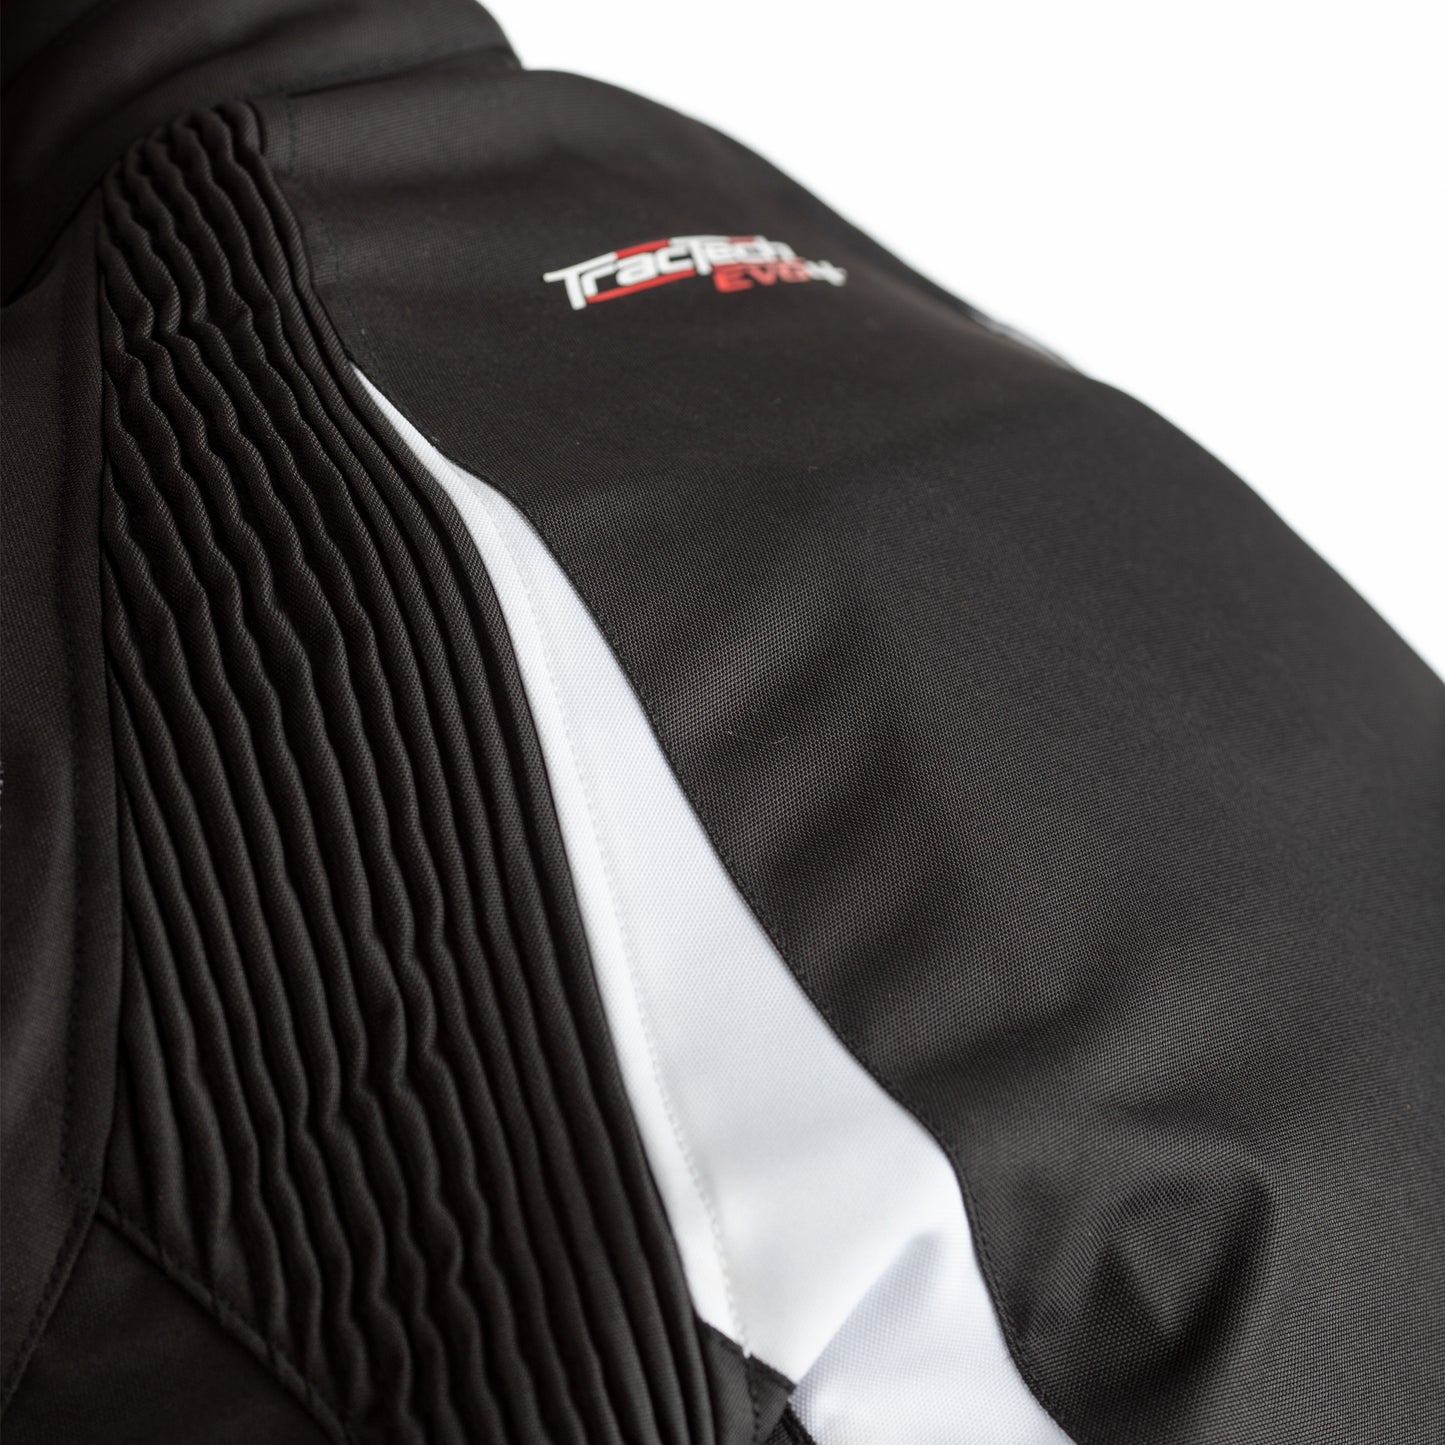 RST Tractech Evo 4 CE Mens Textile Jacket - Black / White (2365)